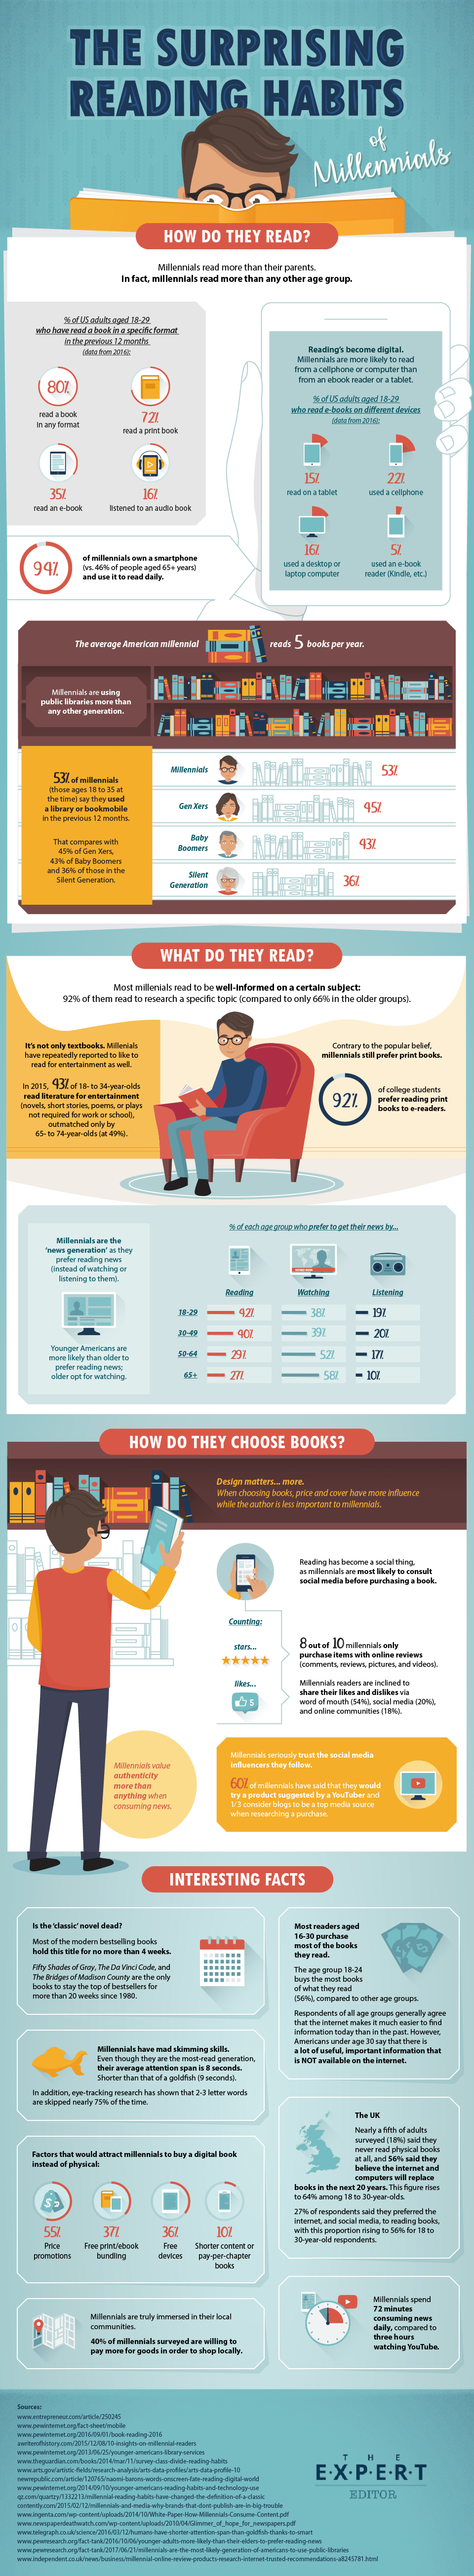 Millennial Reading Habits